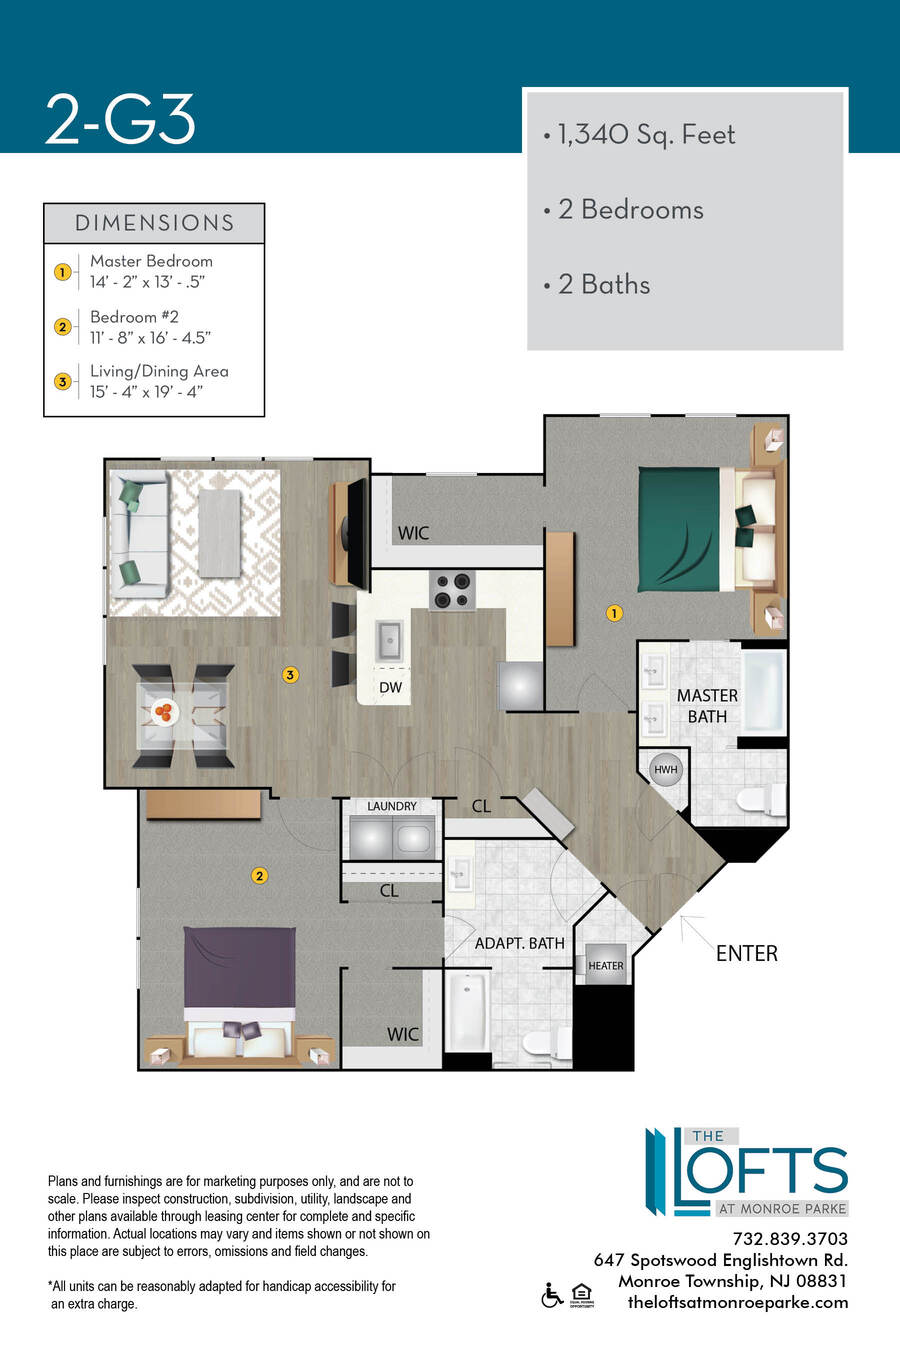 The Lofts at Monroe Park Apartment Floor Plan 2G3